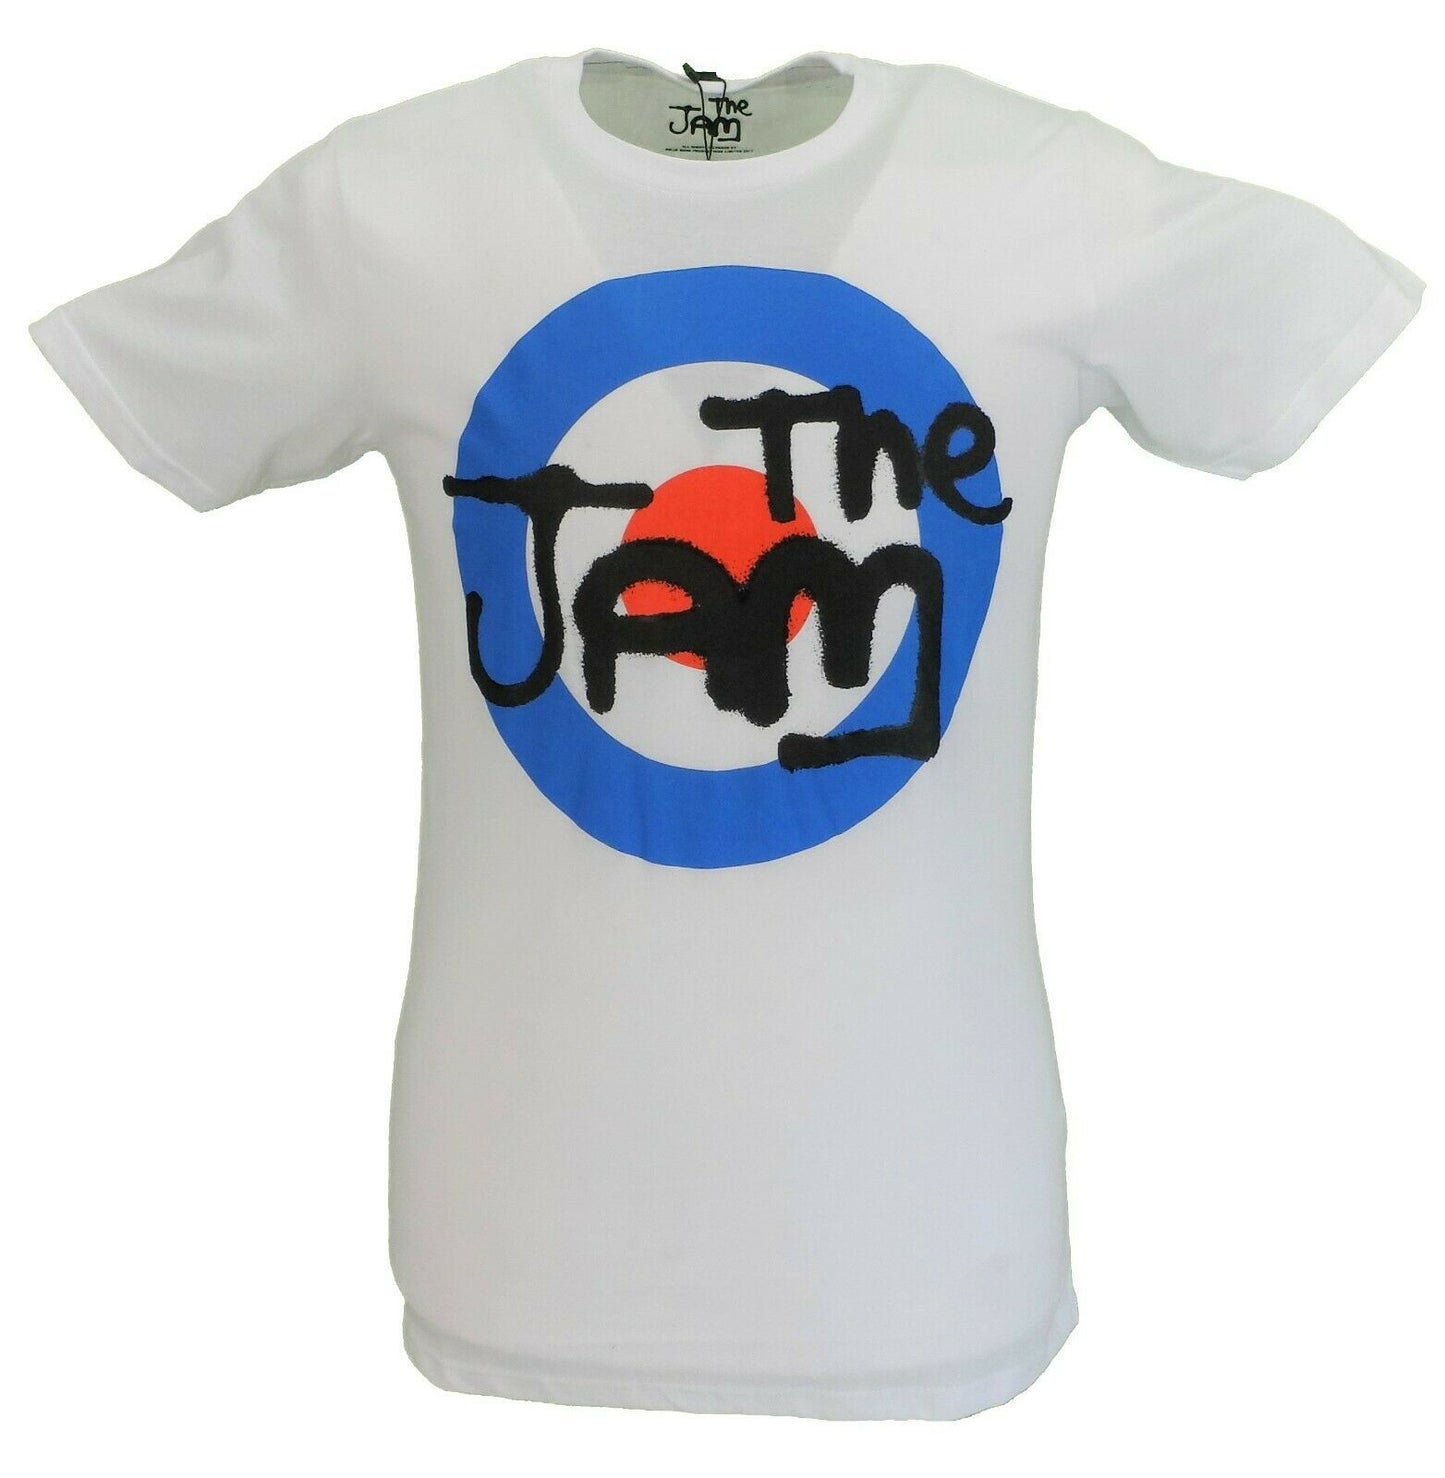 T-shirt ufficiale The Jam da uomo bianca